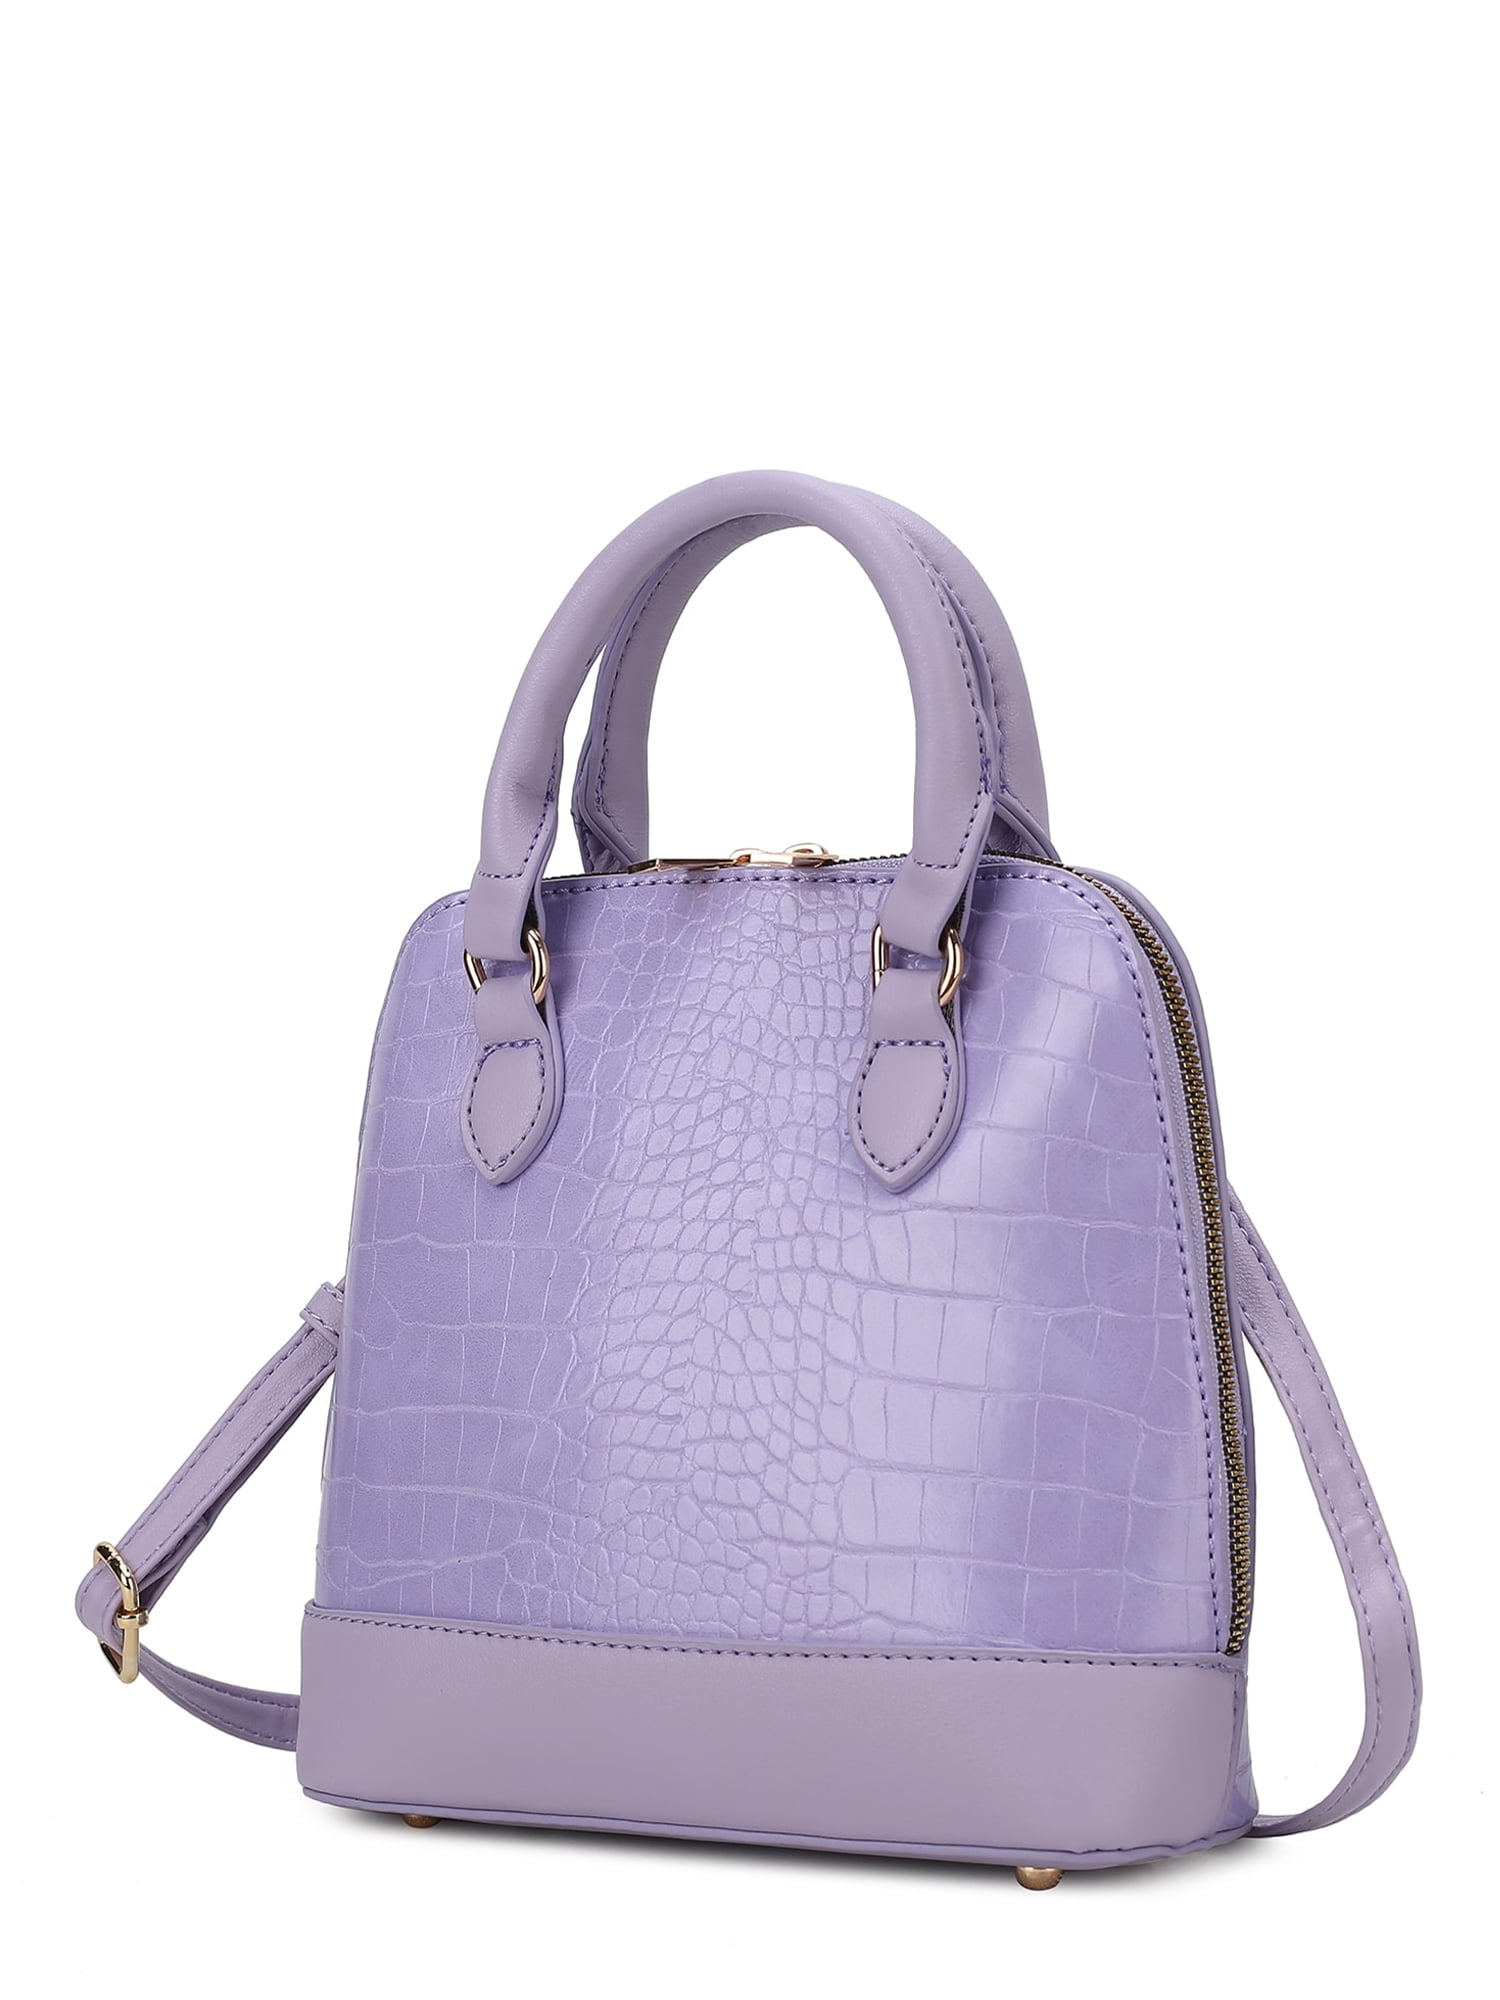 GLOD JORLEE Stylish Chain Satchel Handbags for Women - Luxury Snake-Printed  Leather Shoulder Crossbody Bag Evening Clutch Tote Purse (Blue-violet)